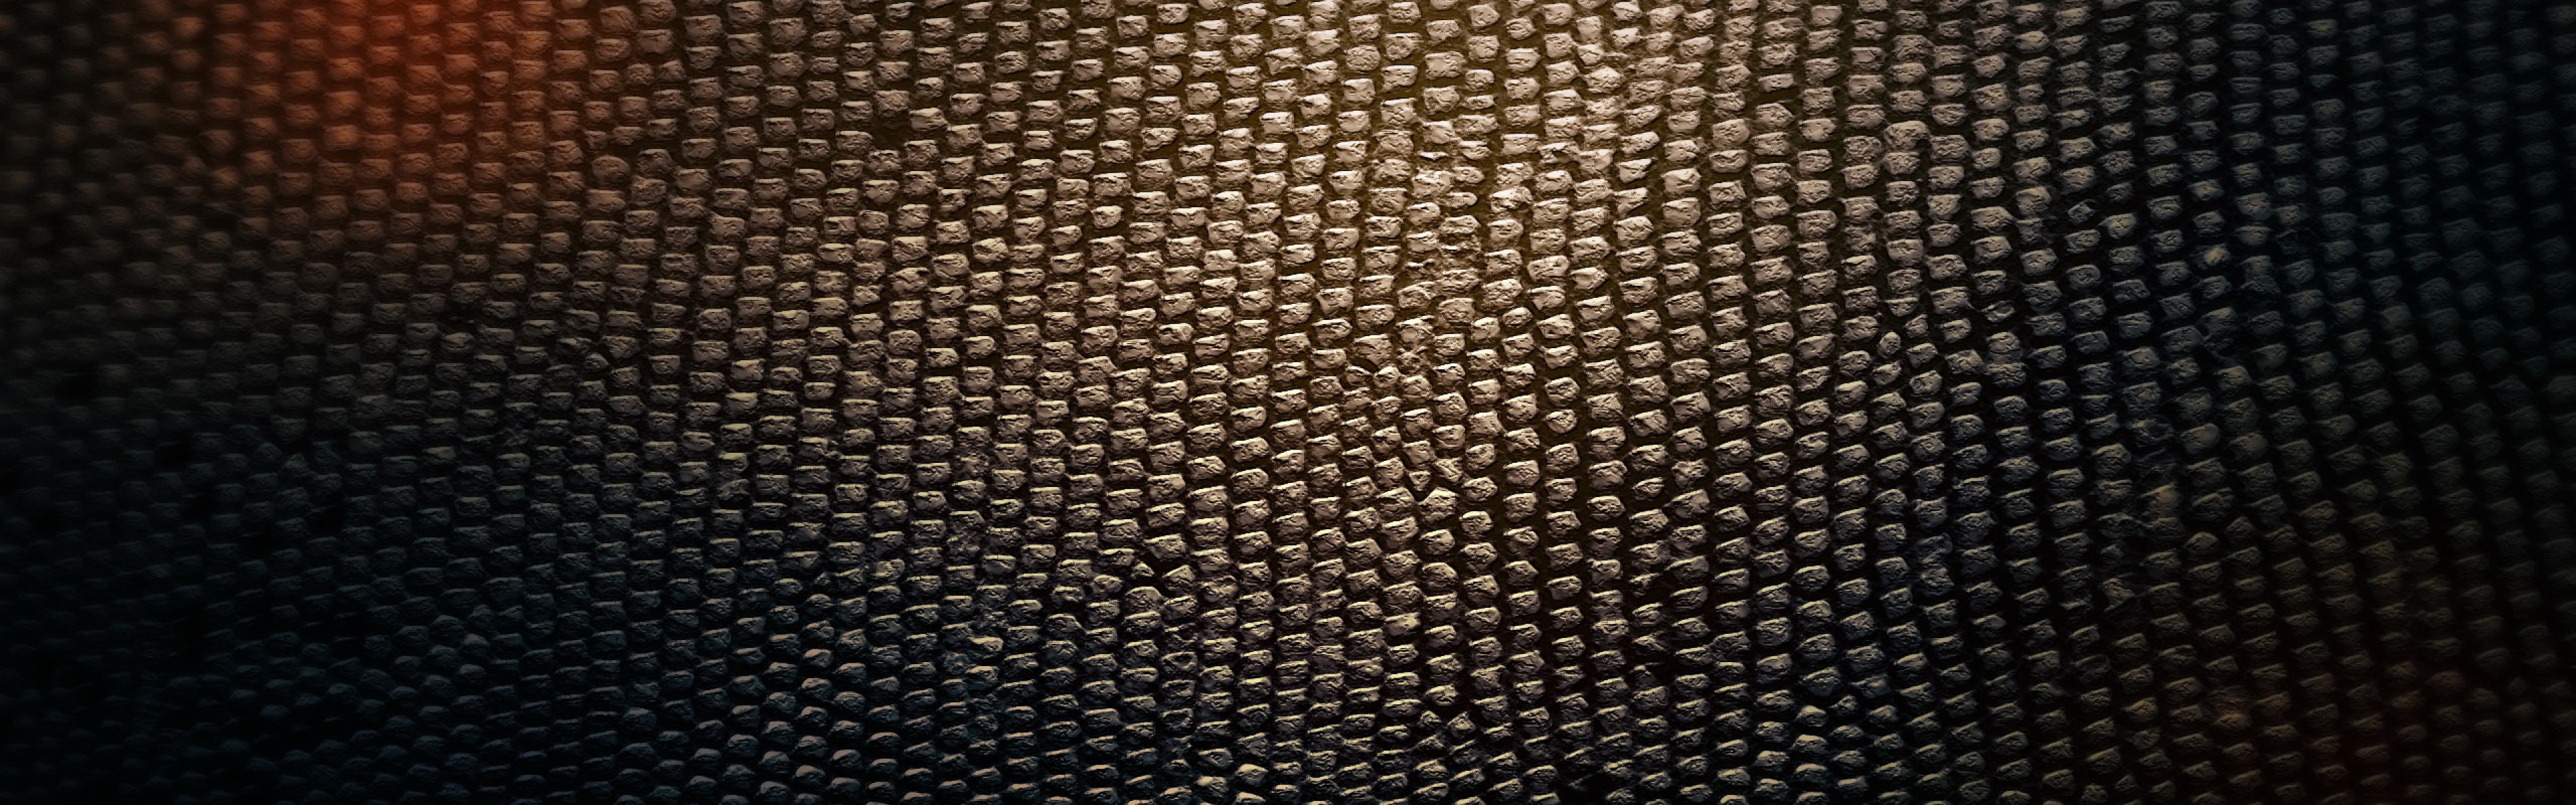 Wallpaper Skin Snake Texture Background Shadow